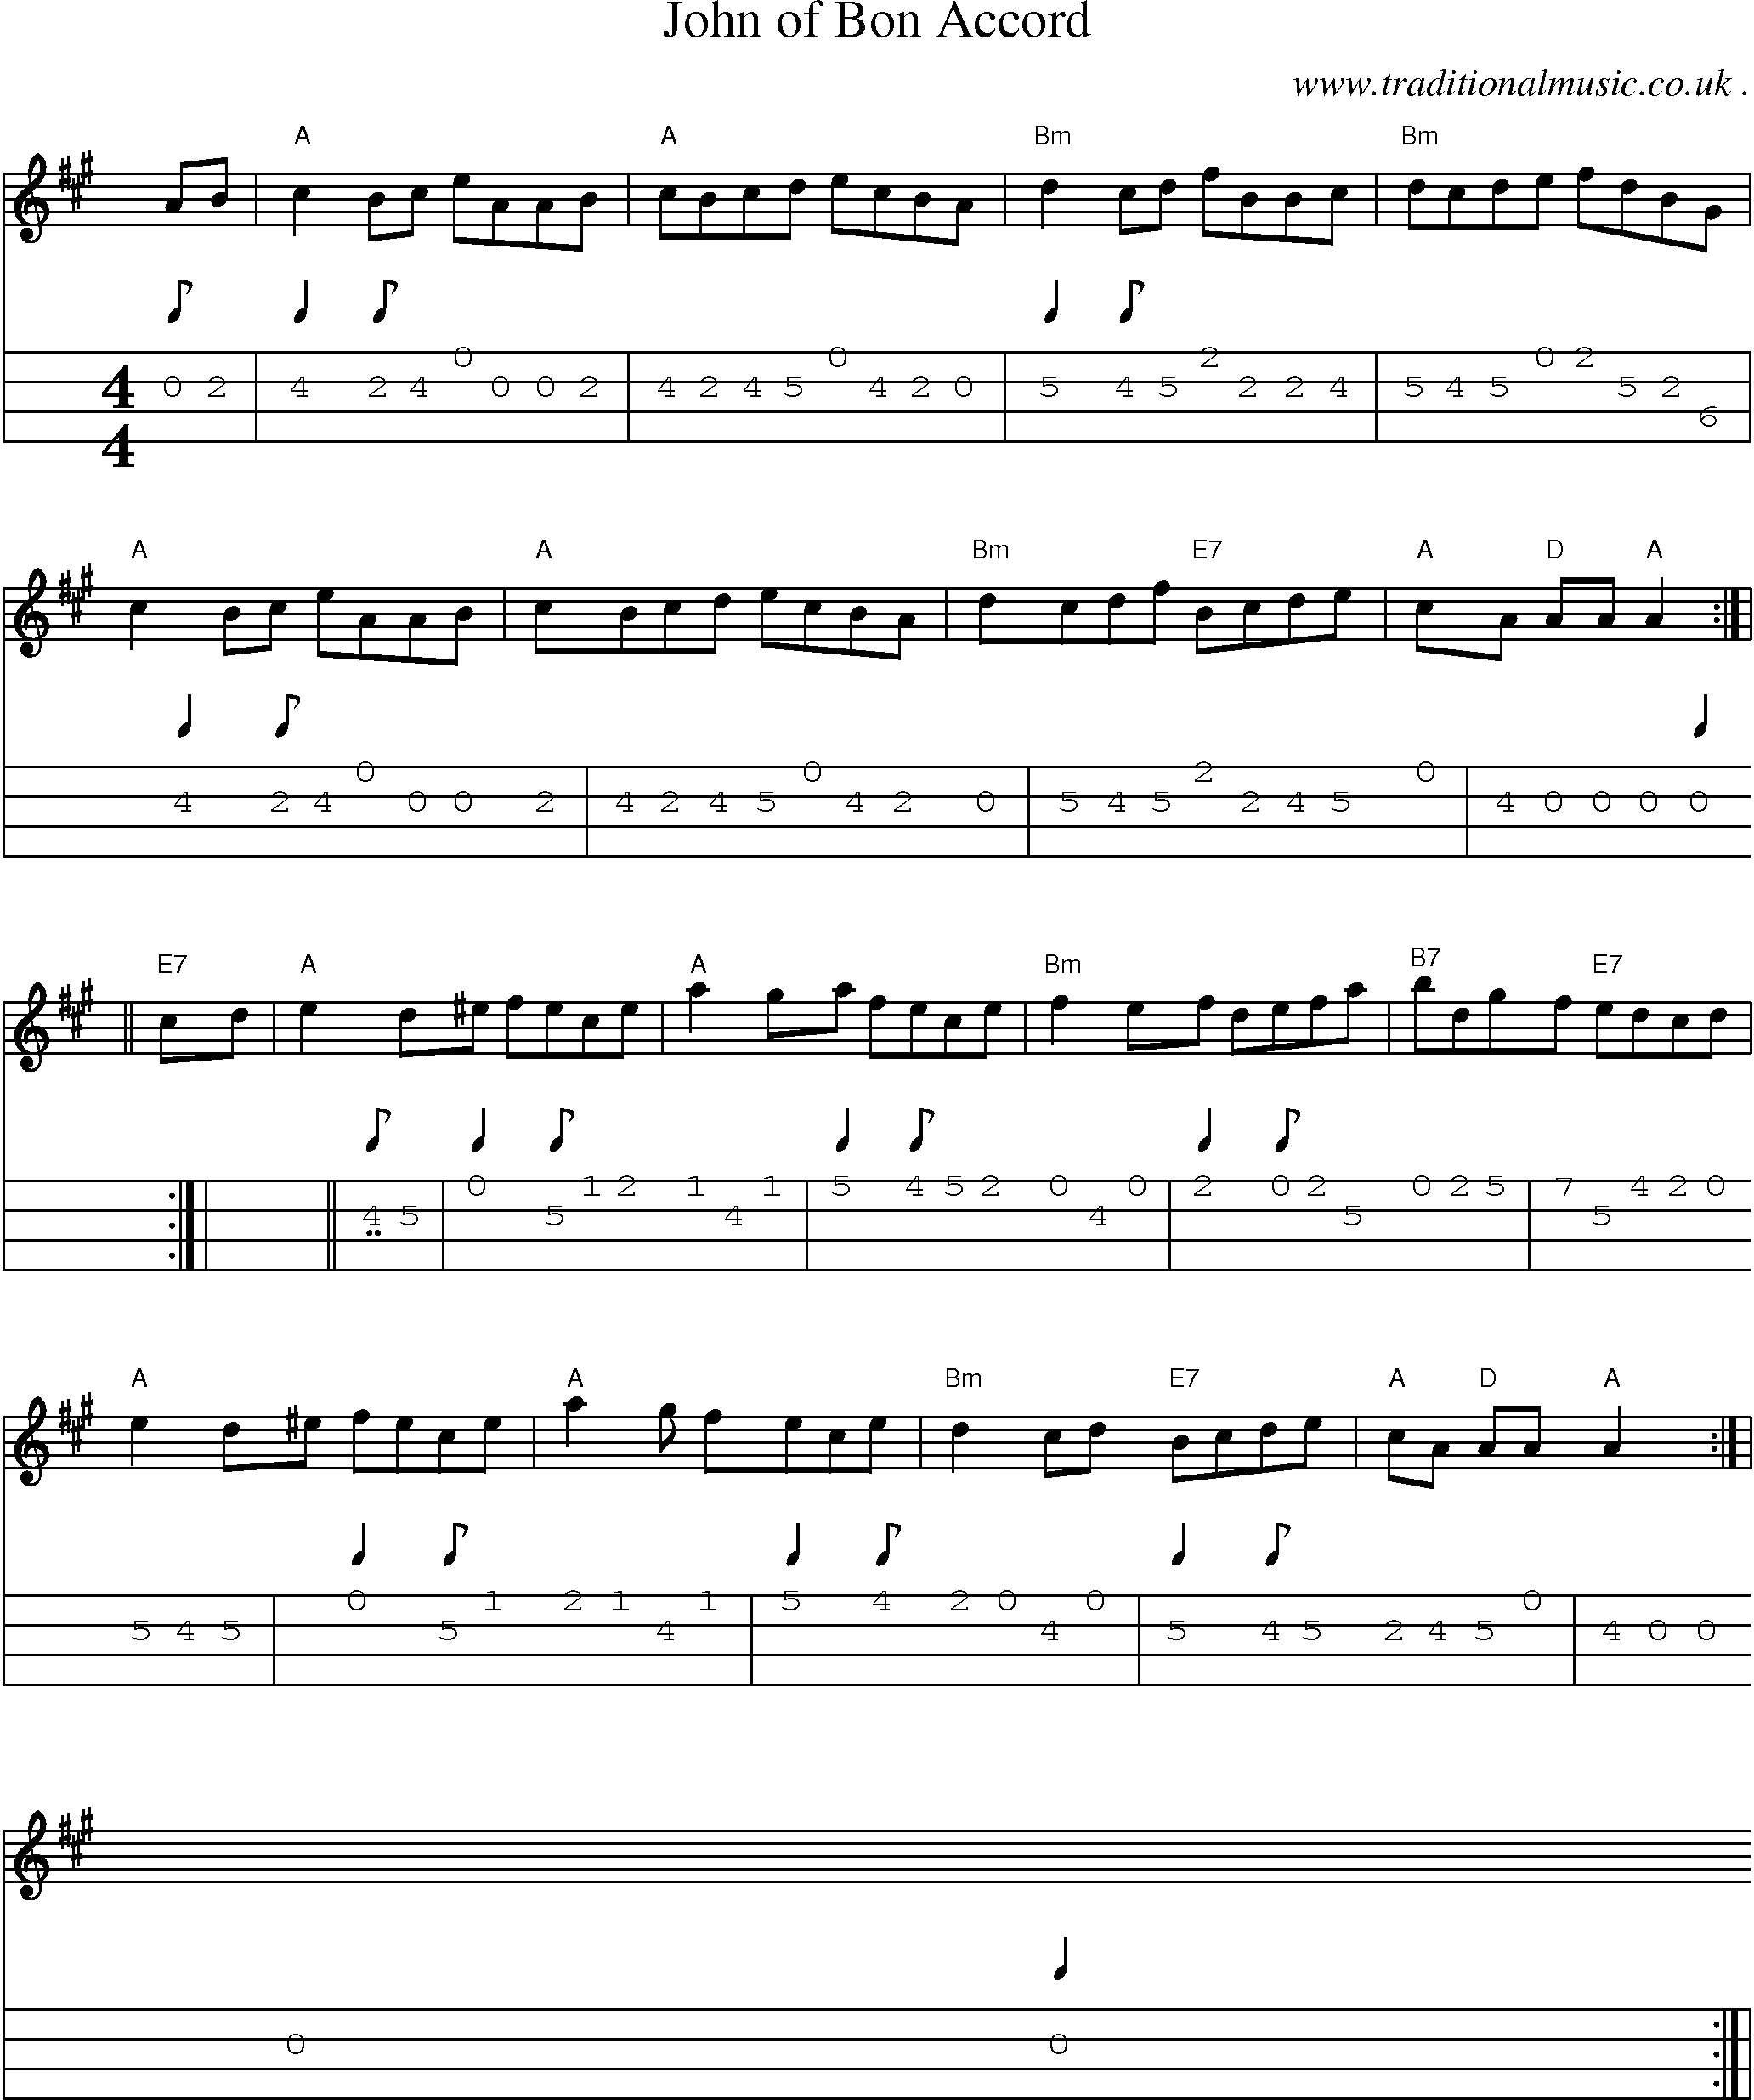 Sheet-music  score, Chords and Mandolin Tabs for John Of Bon Accord